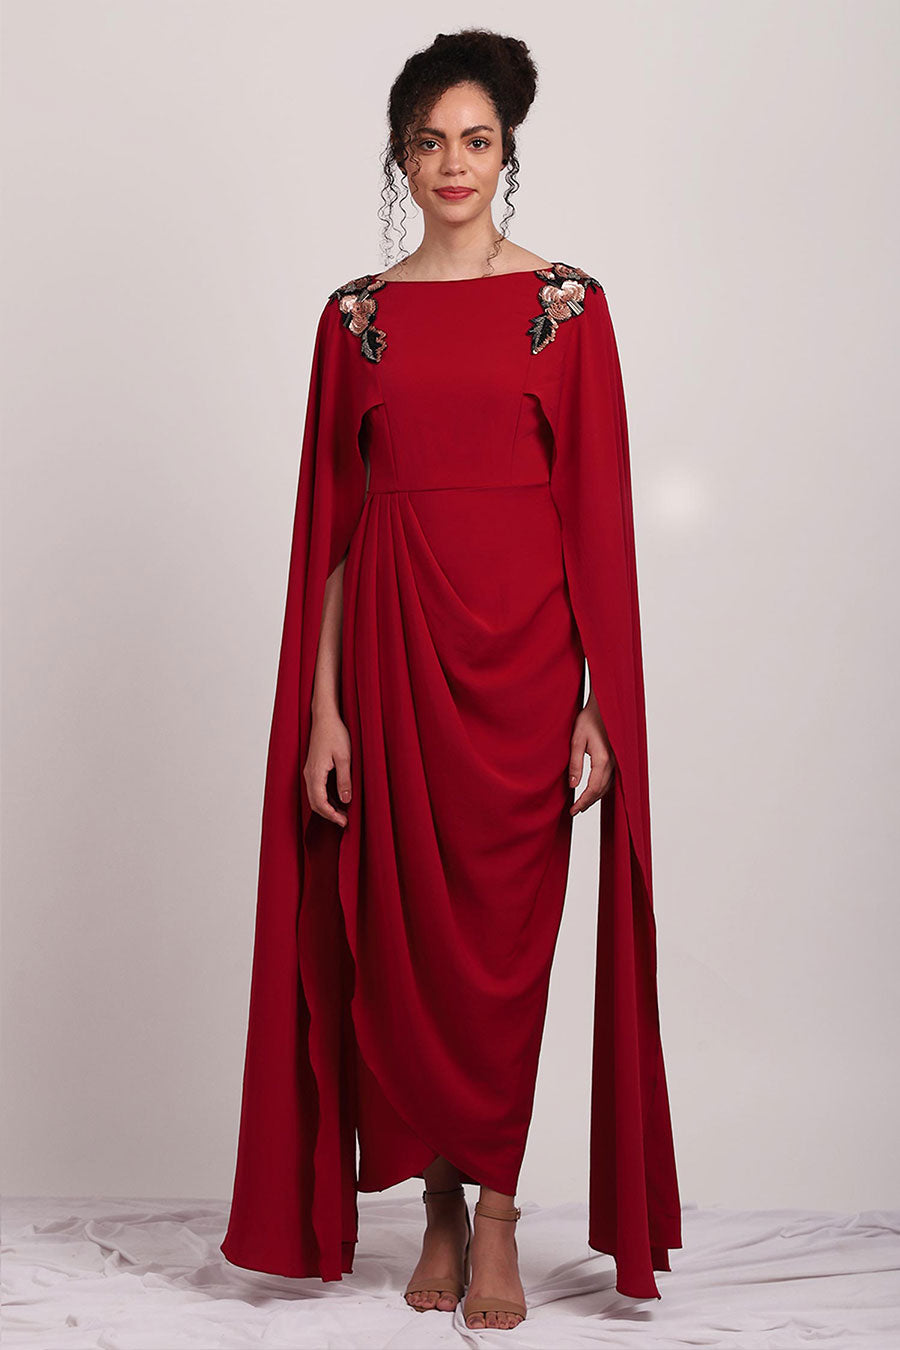 Metallic Floral Red Drape Dress